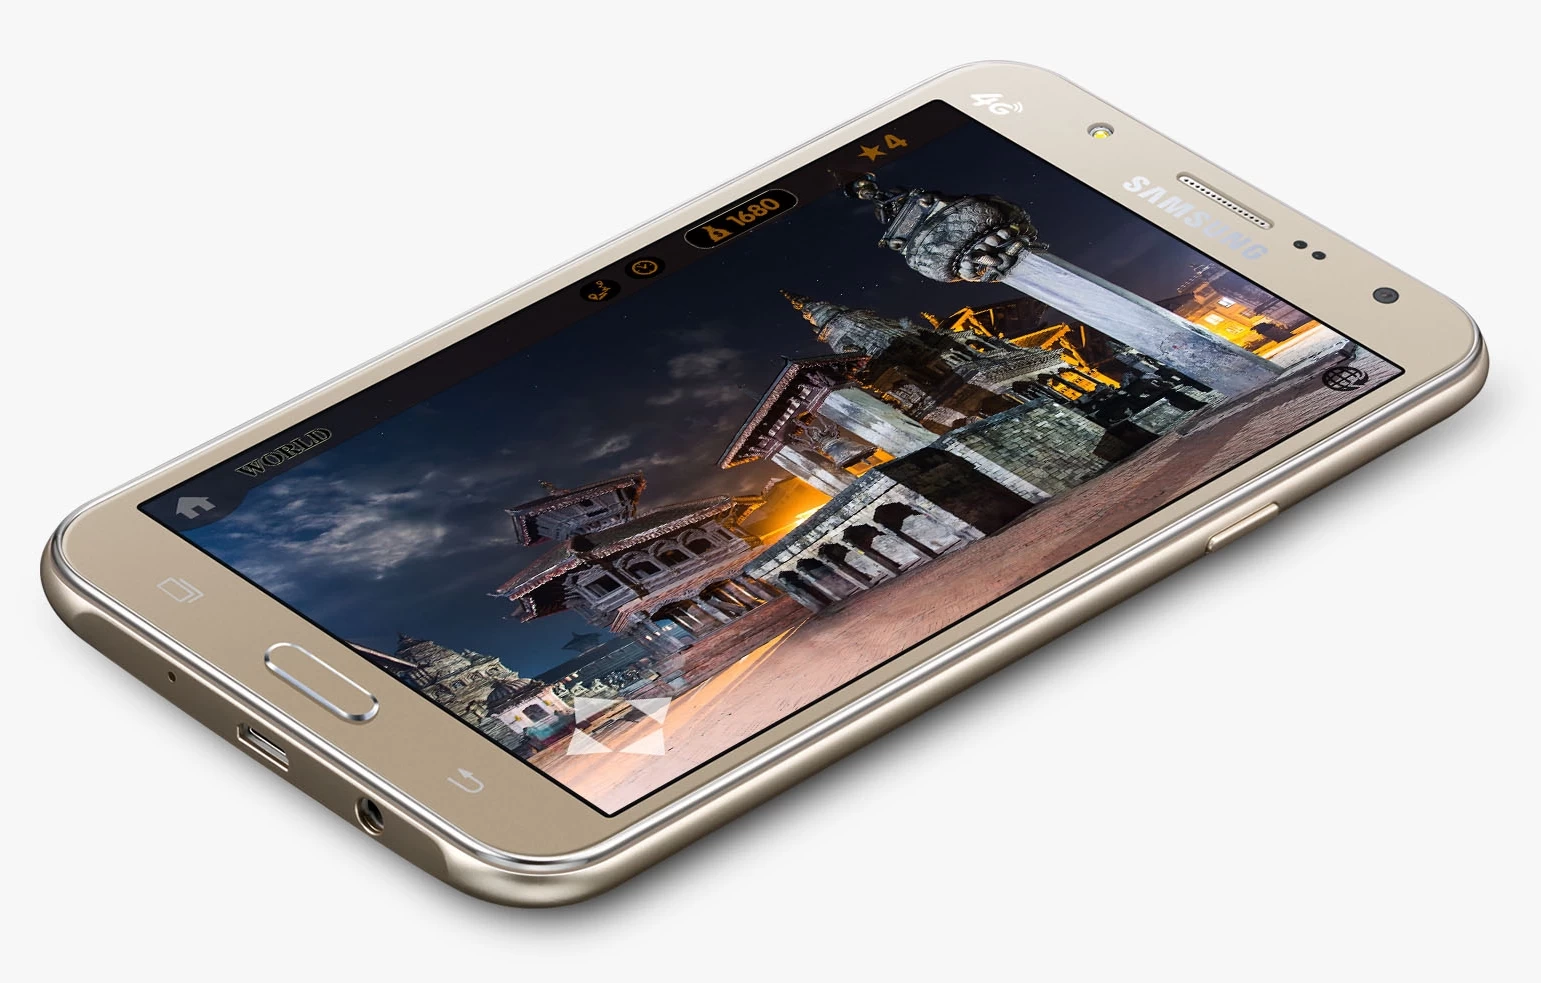 Samsung Galaxy J7 | Galaxy J5 | เปิดตัวอย่างเป็นทางการ Galaxy J7 และ J5 มือถือกล้องหน้าพร้อมไฟแฟลชรุ่นแรกจาก Samsung